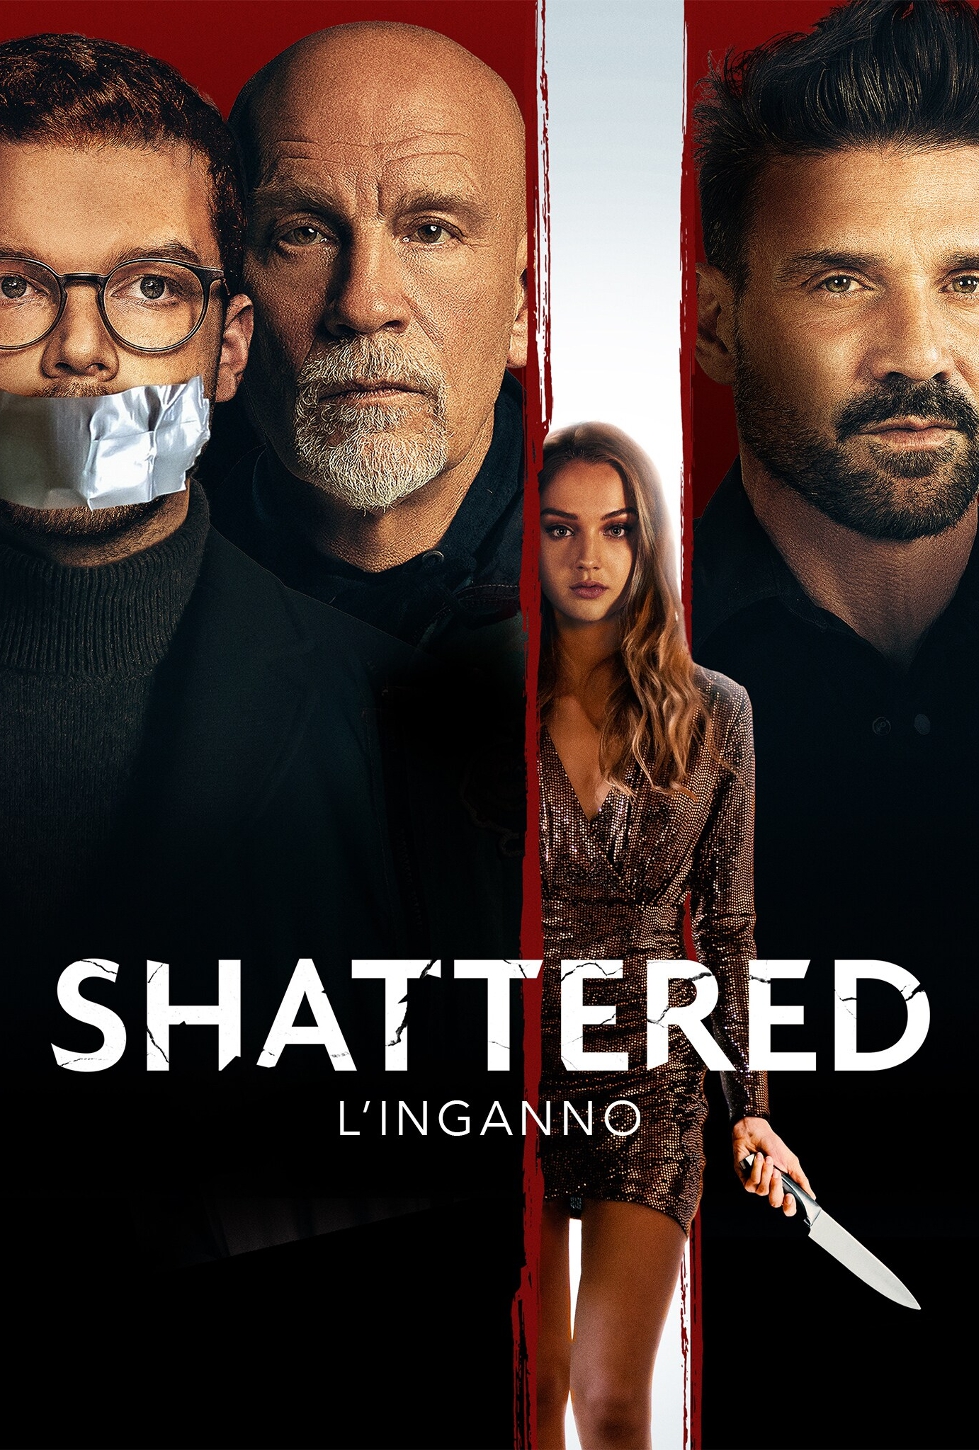 Shattered – L’inganno [HD] (2022)